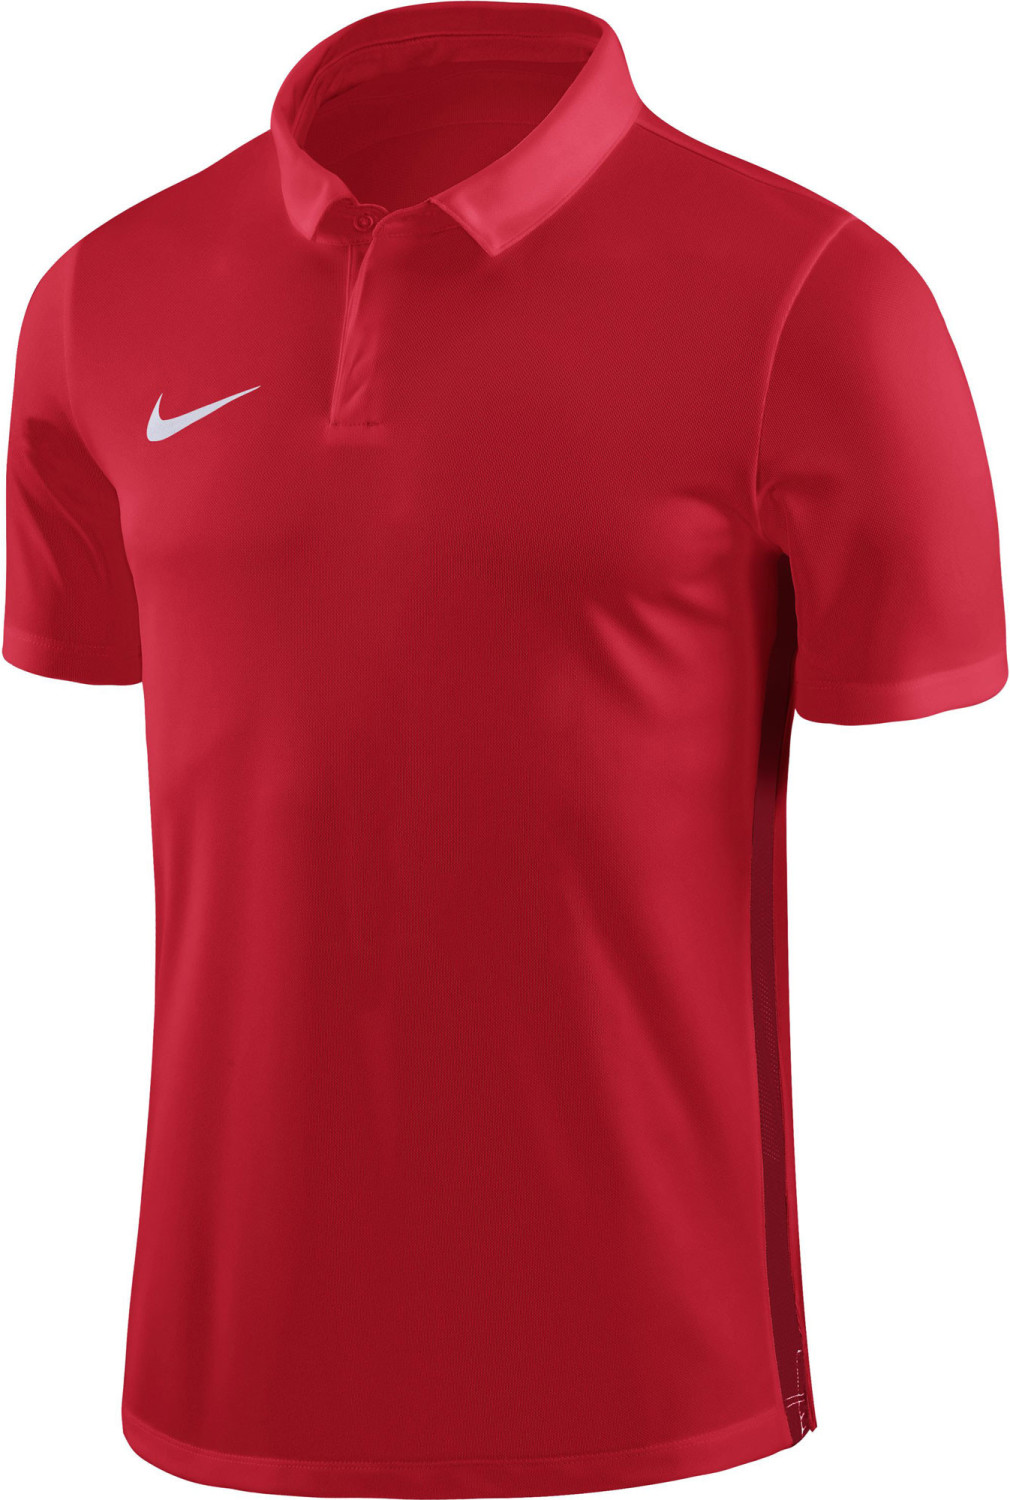 Nike Academy 18 Poloshirt (899984) university red/gym red/white